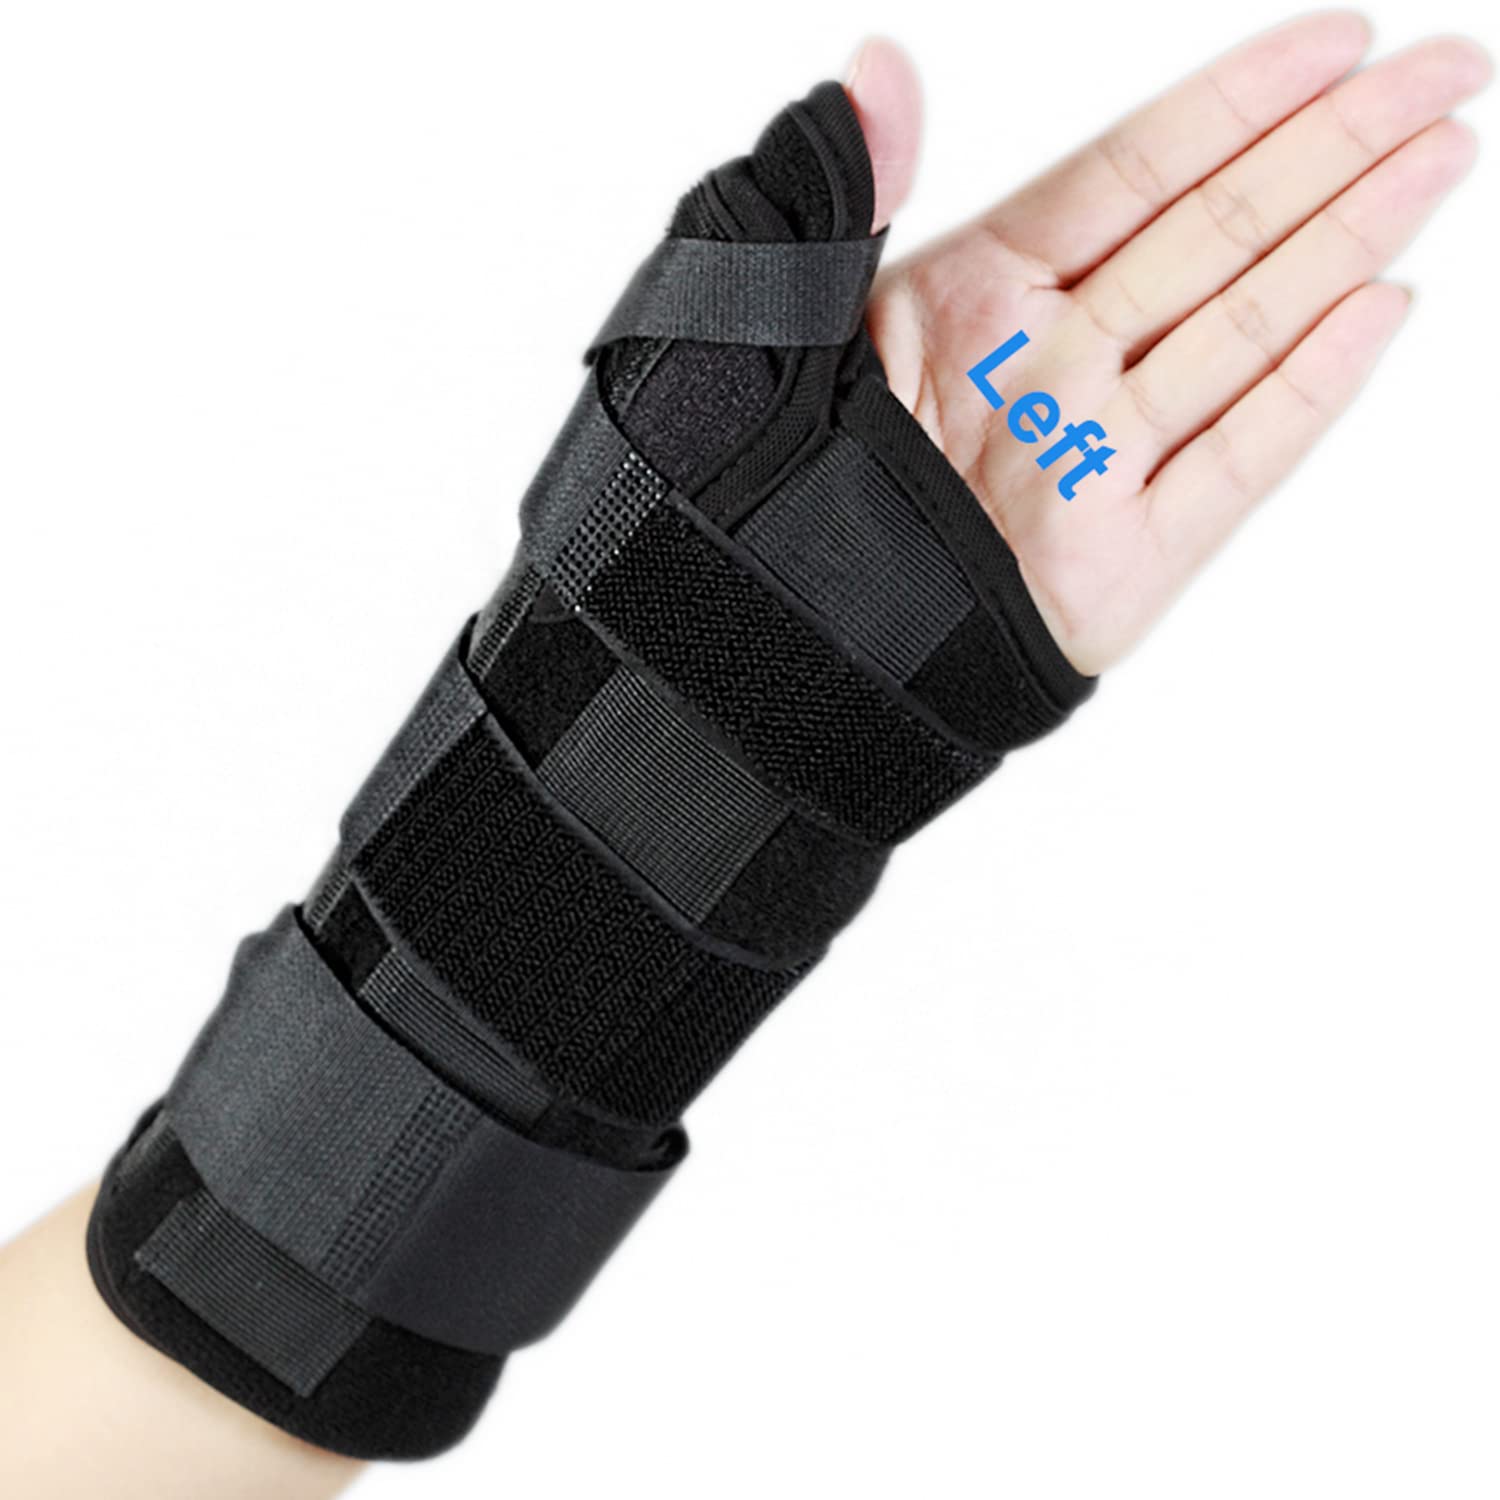 Wrist Brace with Thumb Spica Splint for De Quervain's